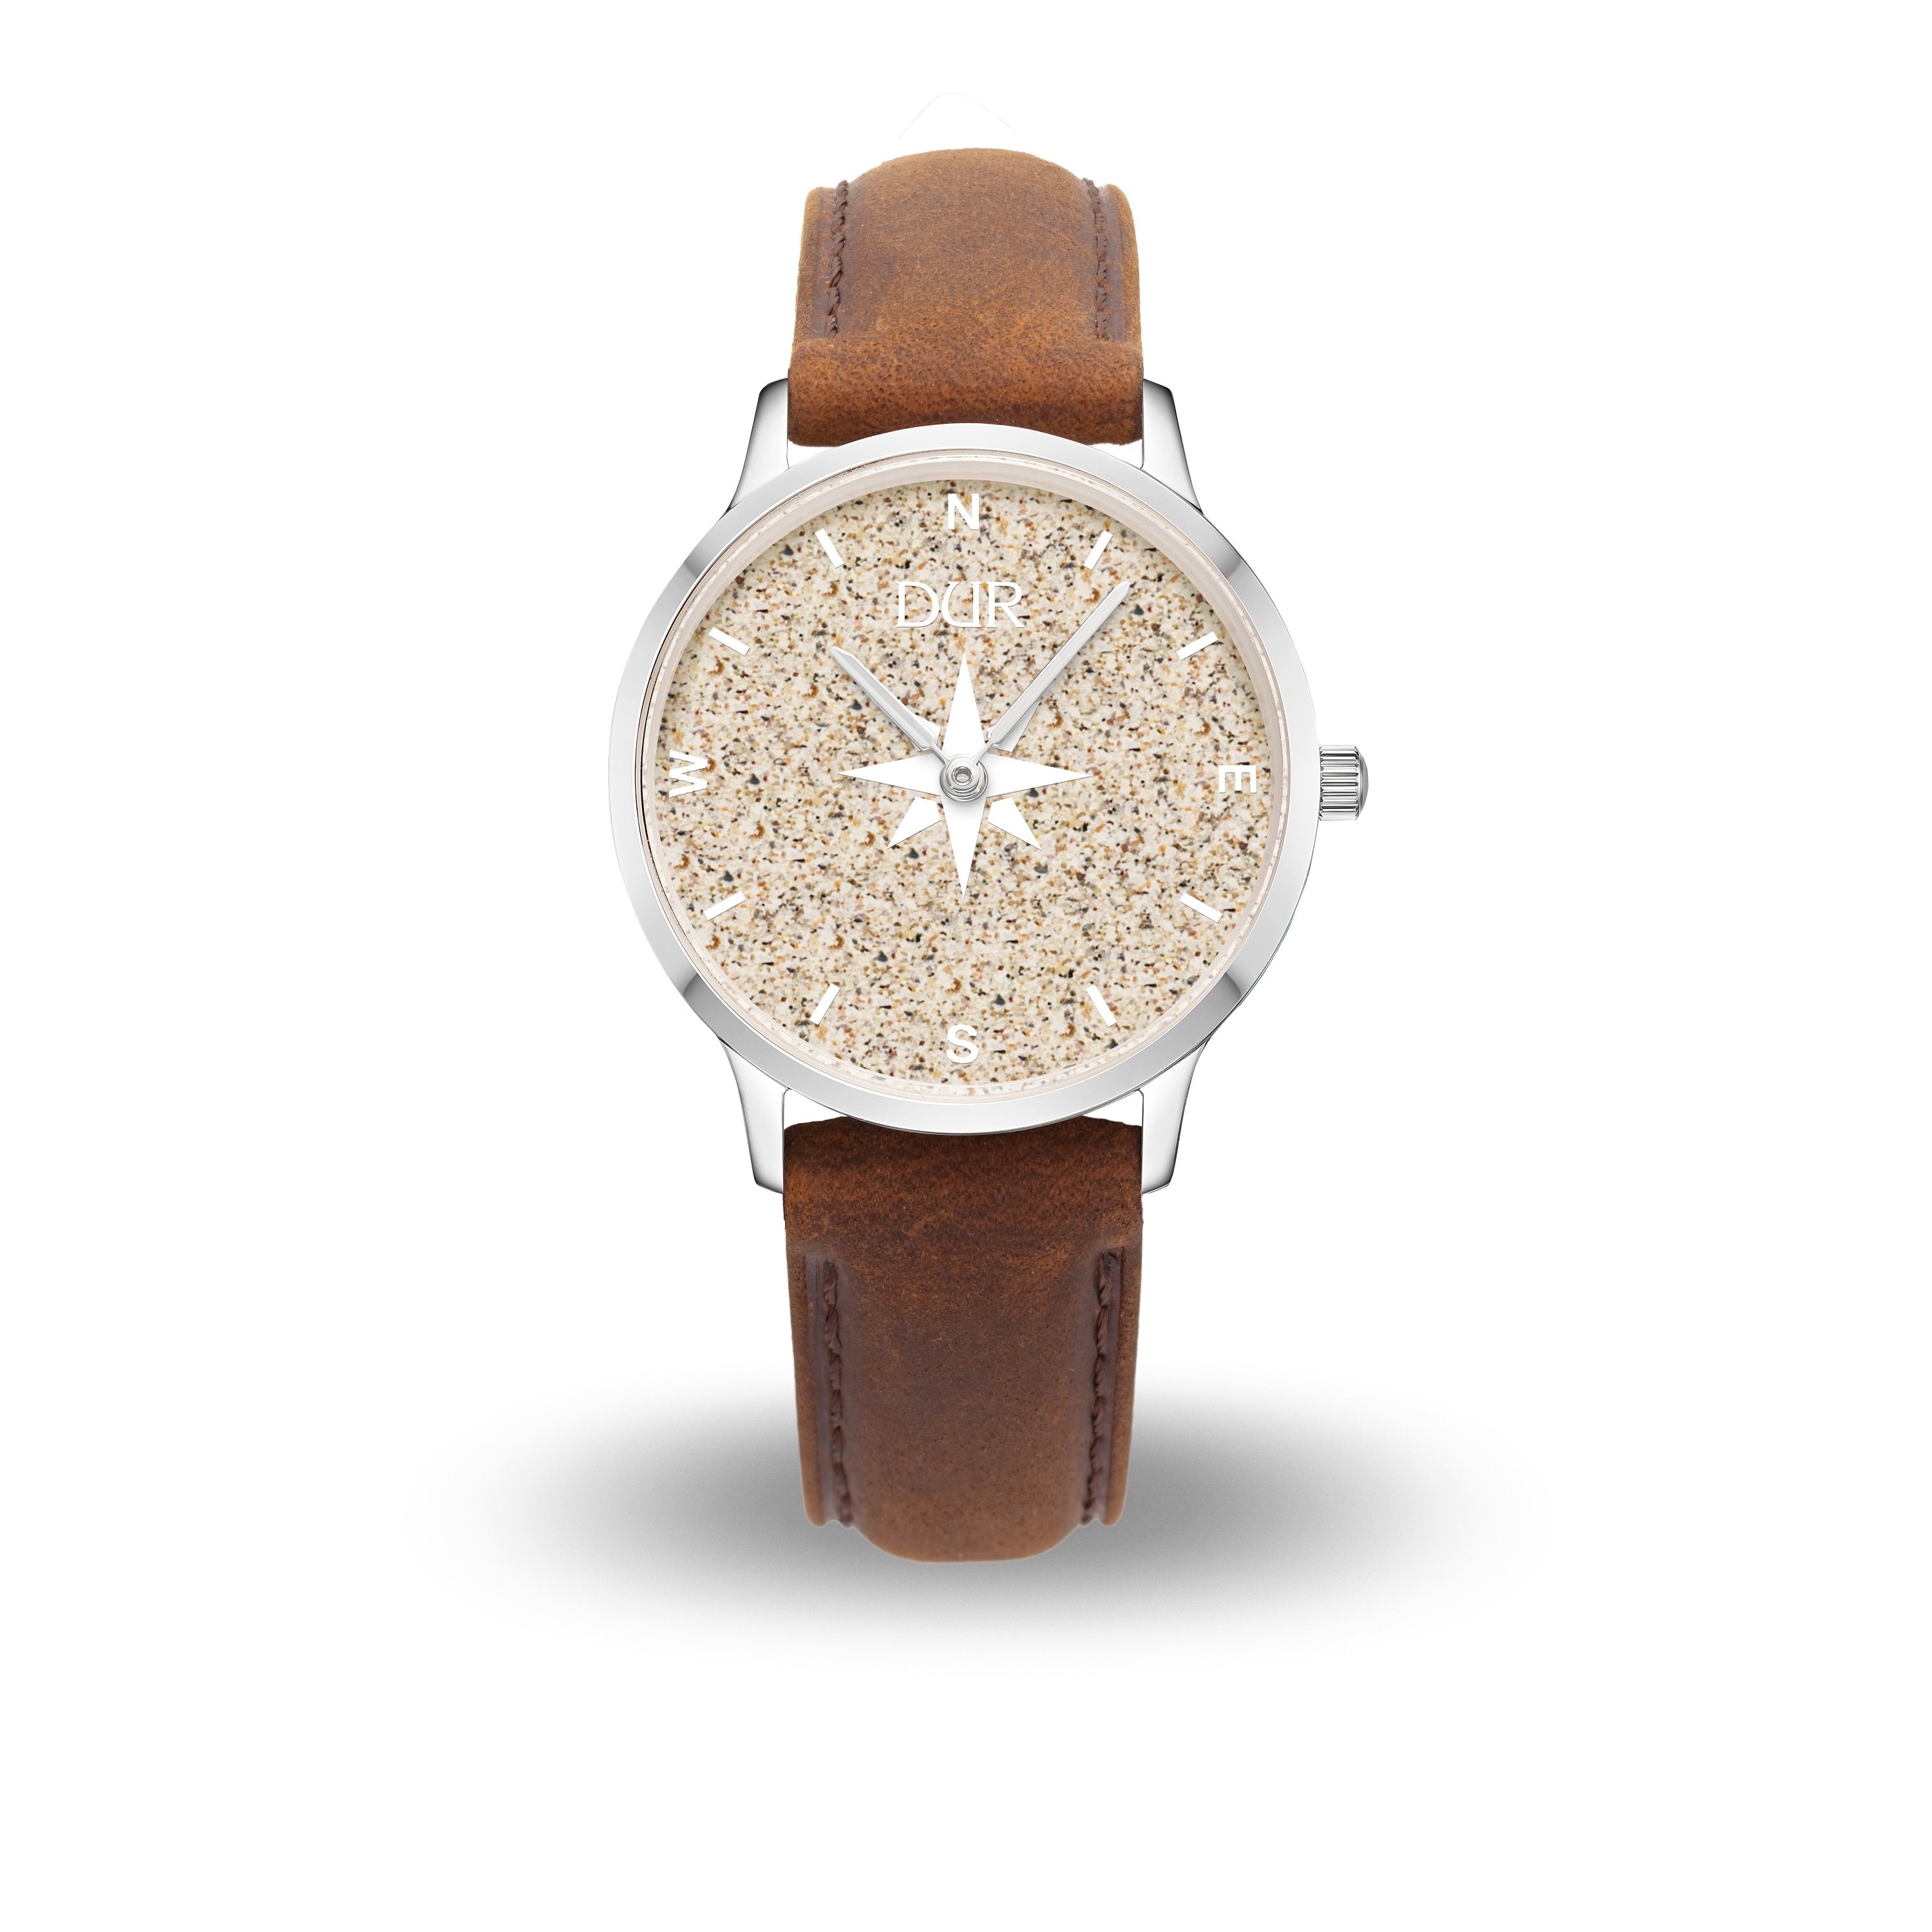 DUR Armbanduhr 40er Kompass 2.0 Strandsand Lederband Braun DW019